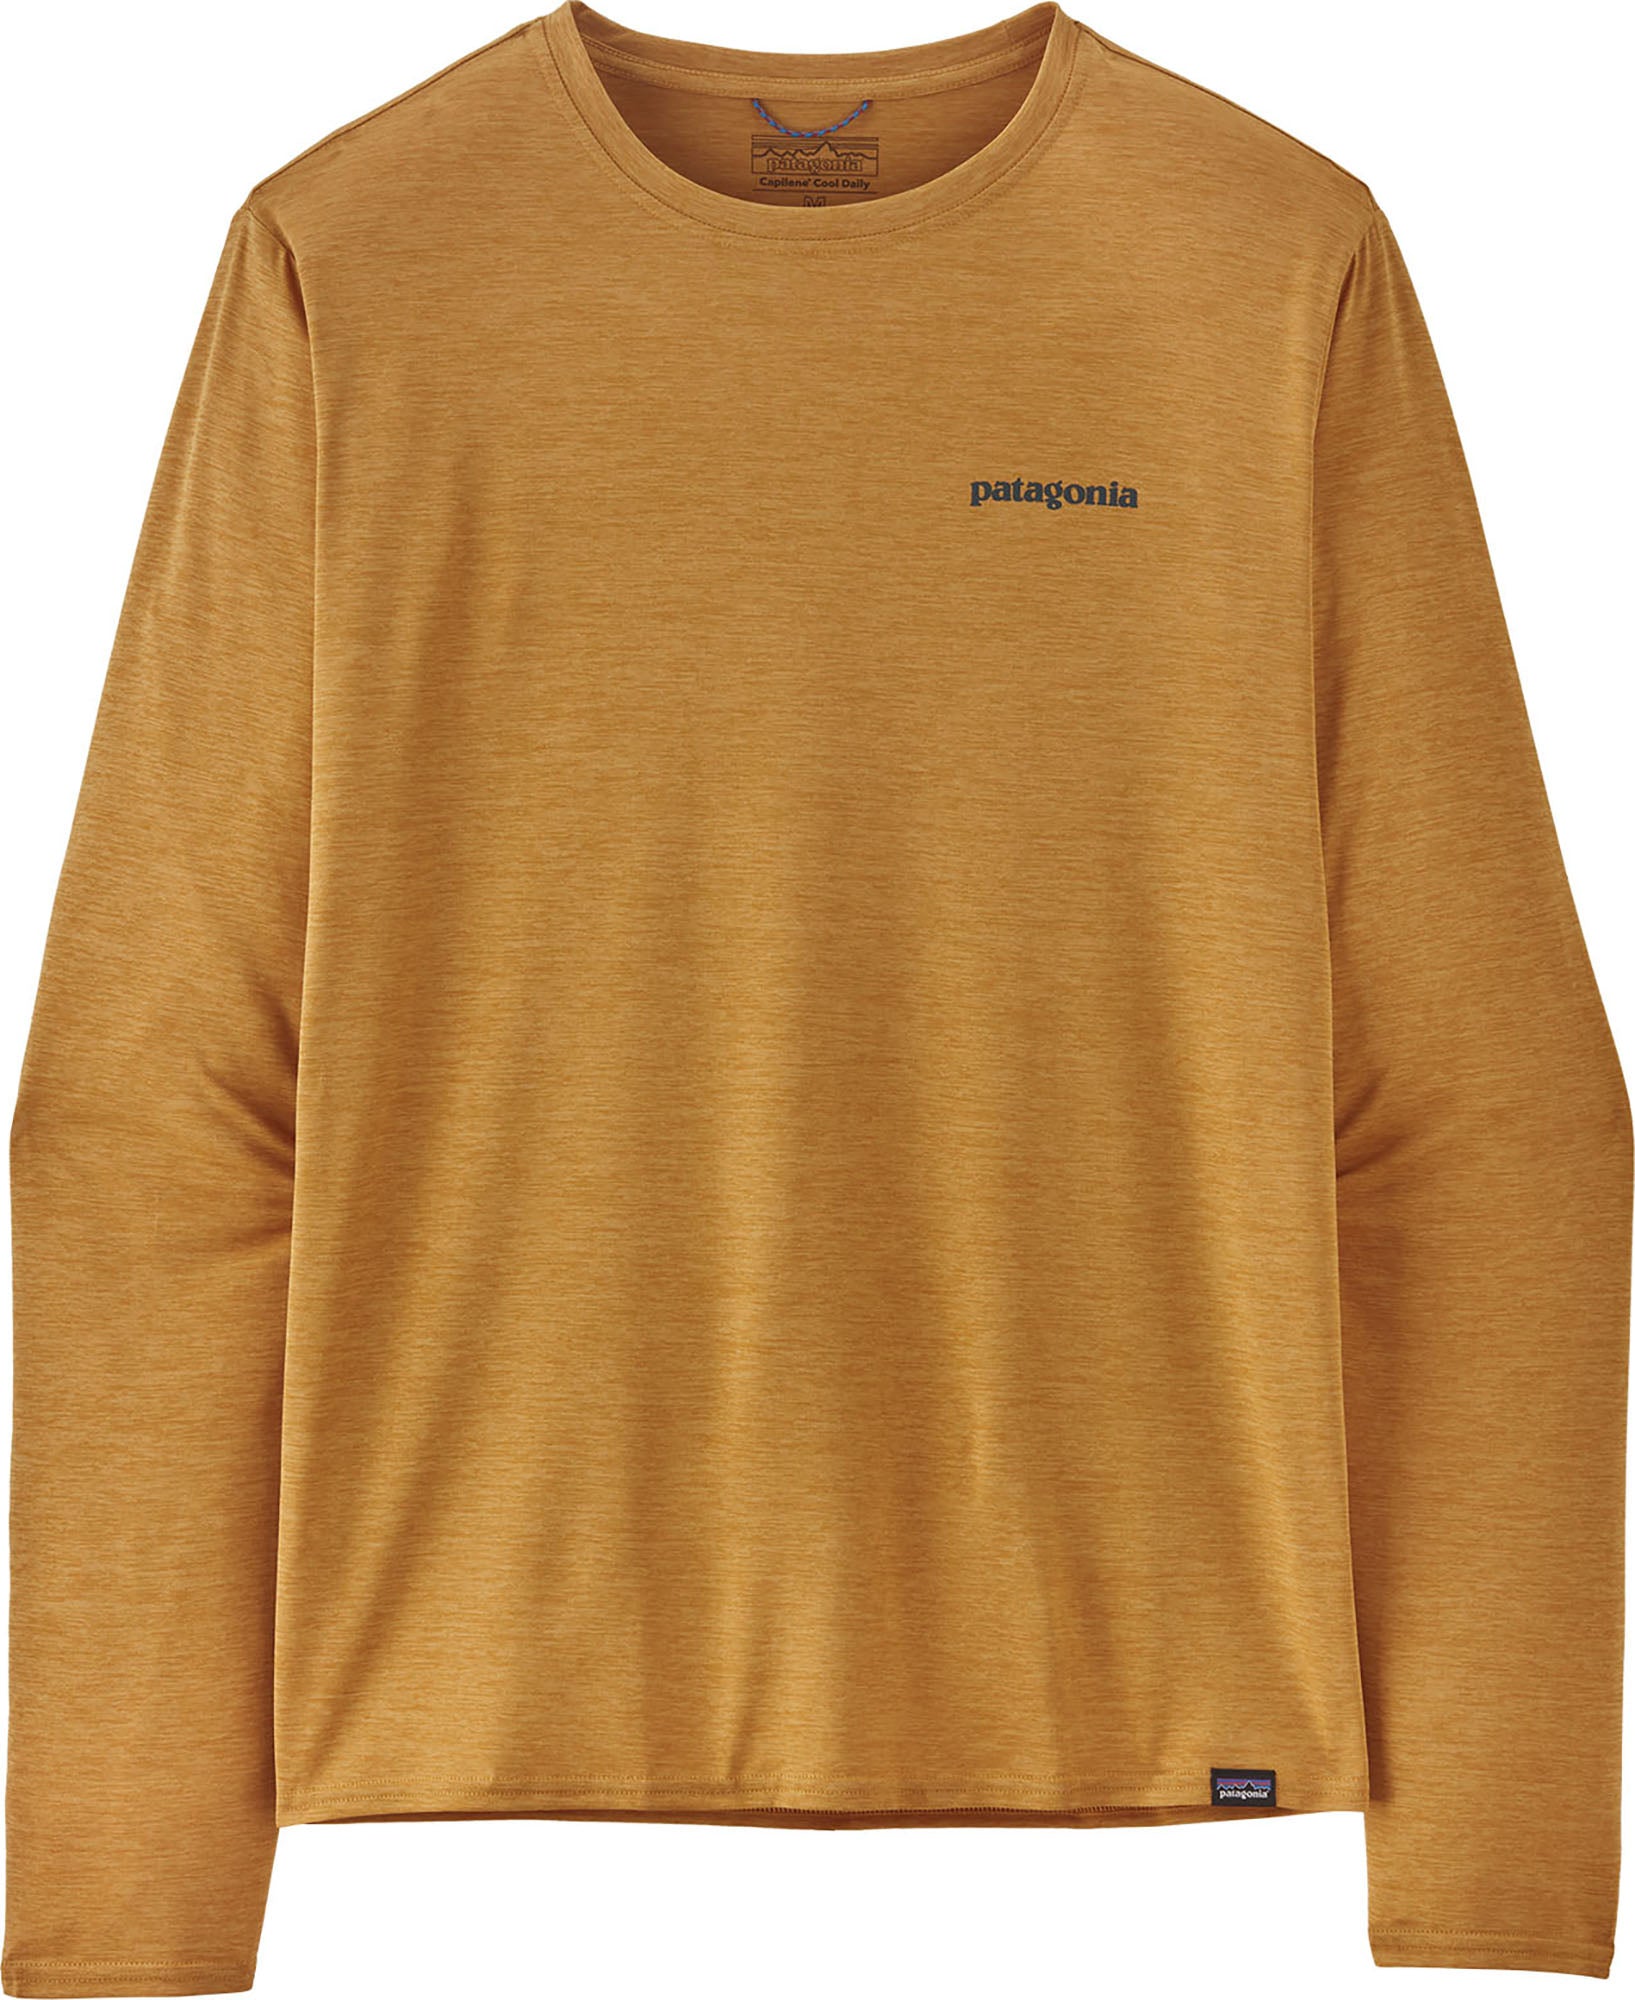 Patagonia Long-Sleeved Capilene Cool Daily Graphic Shirt-Waters - Men's S Boardshort Logo - Pufferfish Gold X-Dye